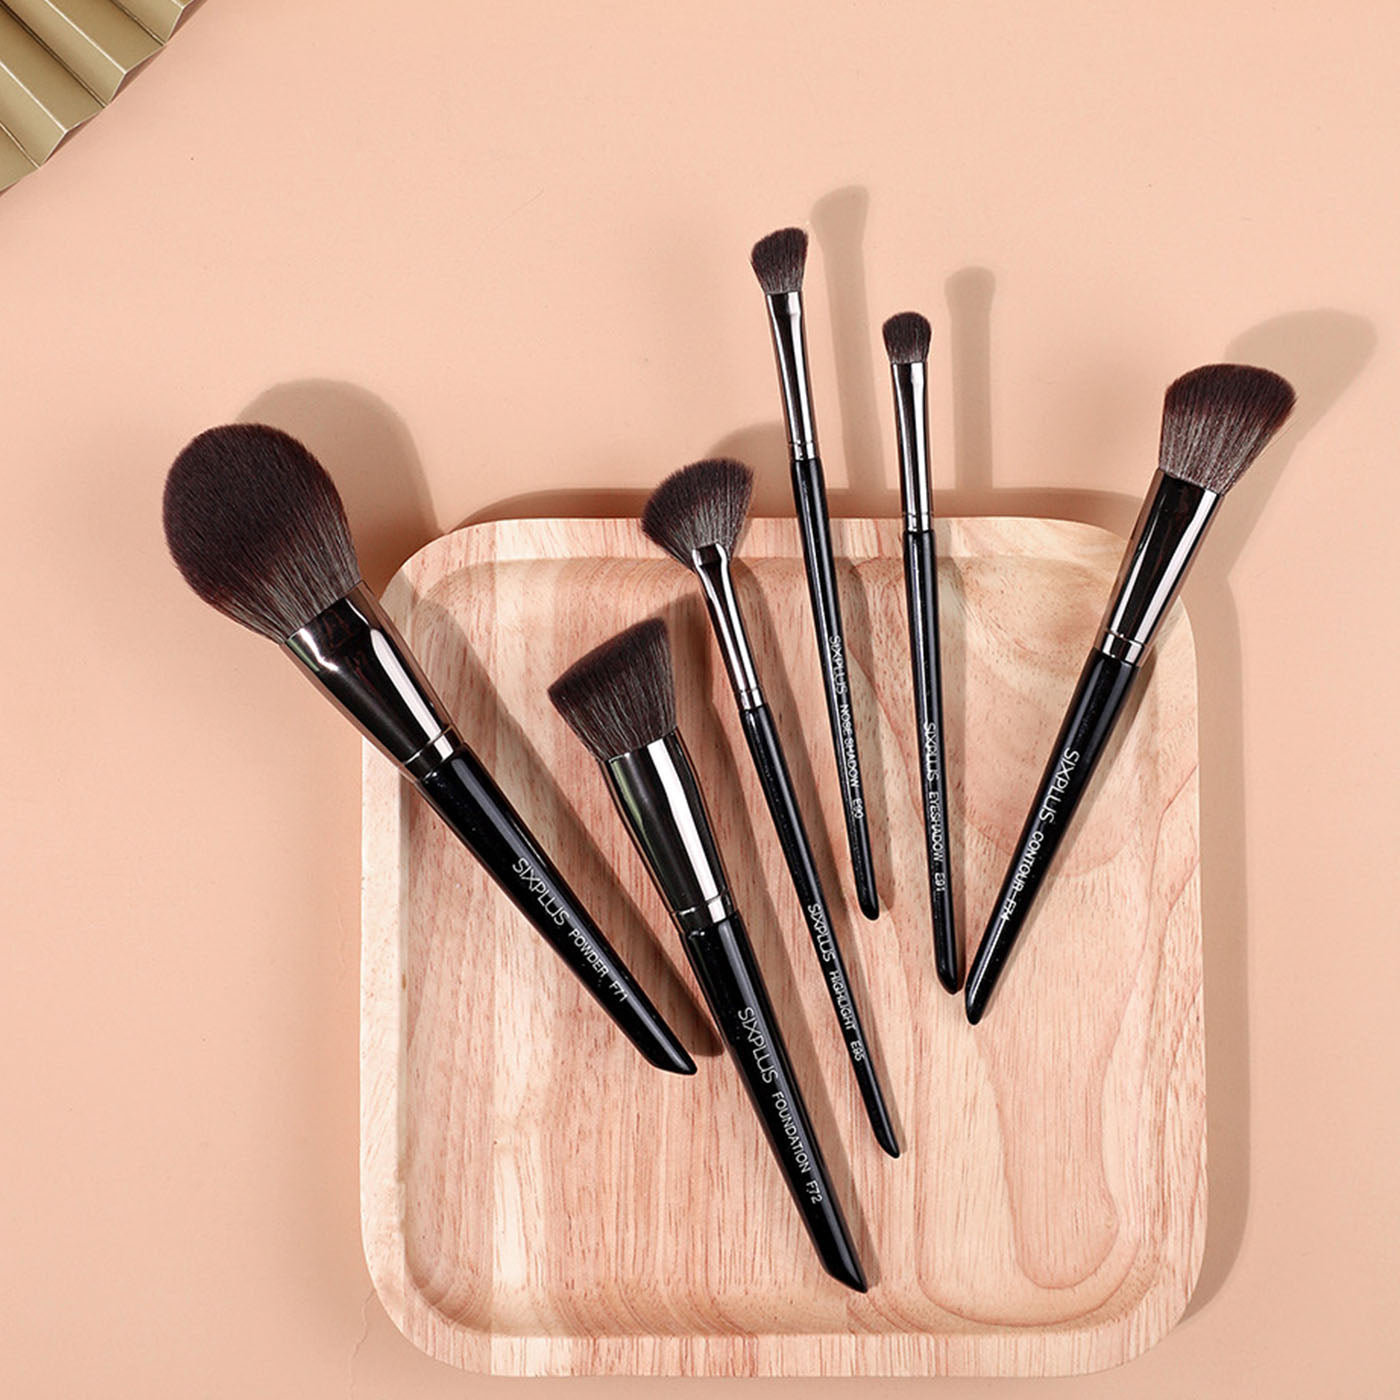 11pcs Makeup Brush Set Master Series